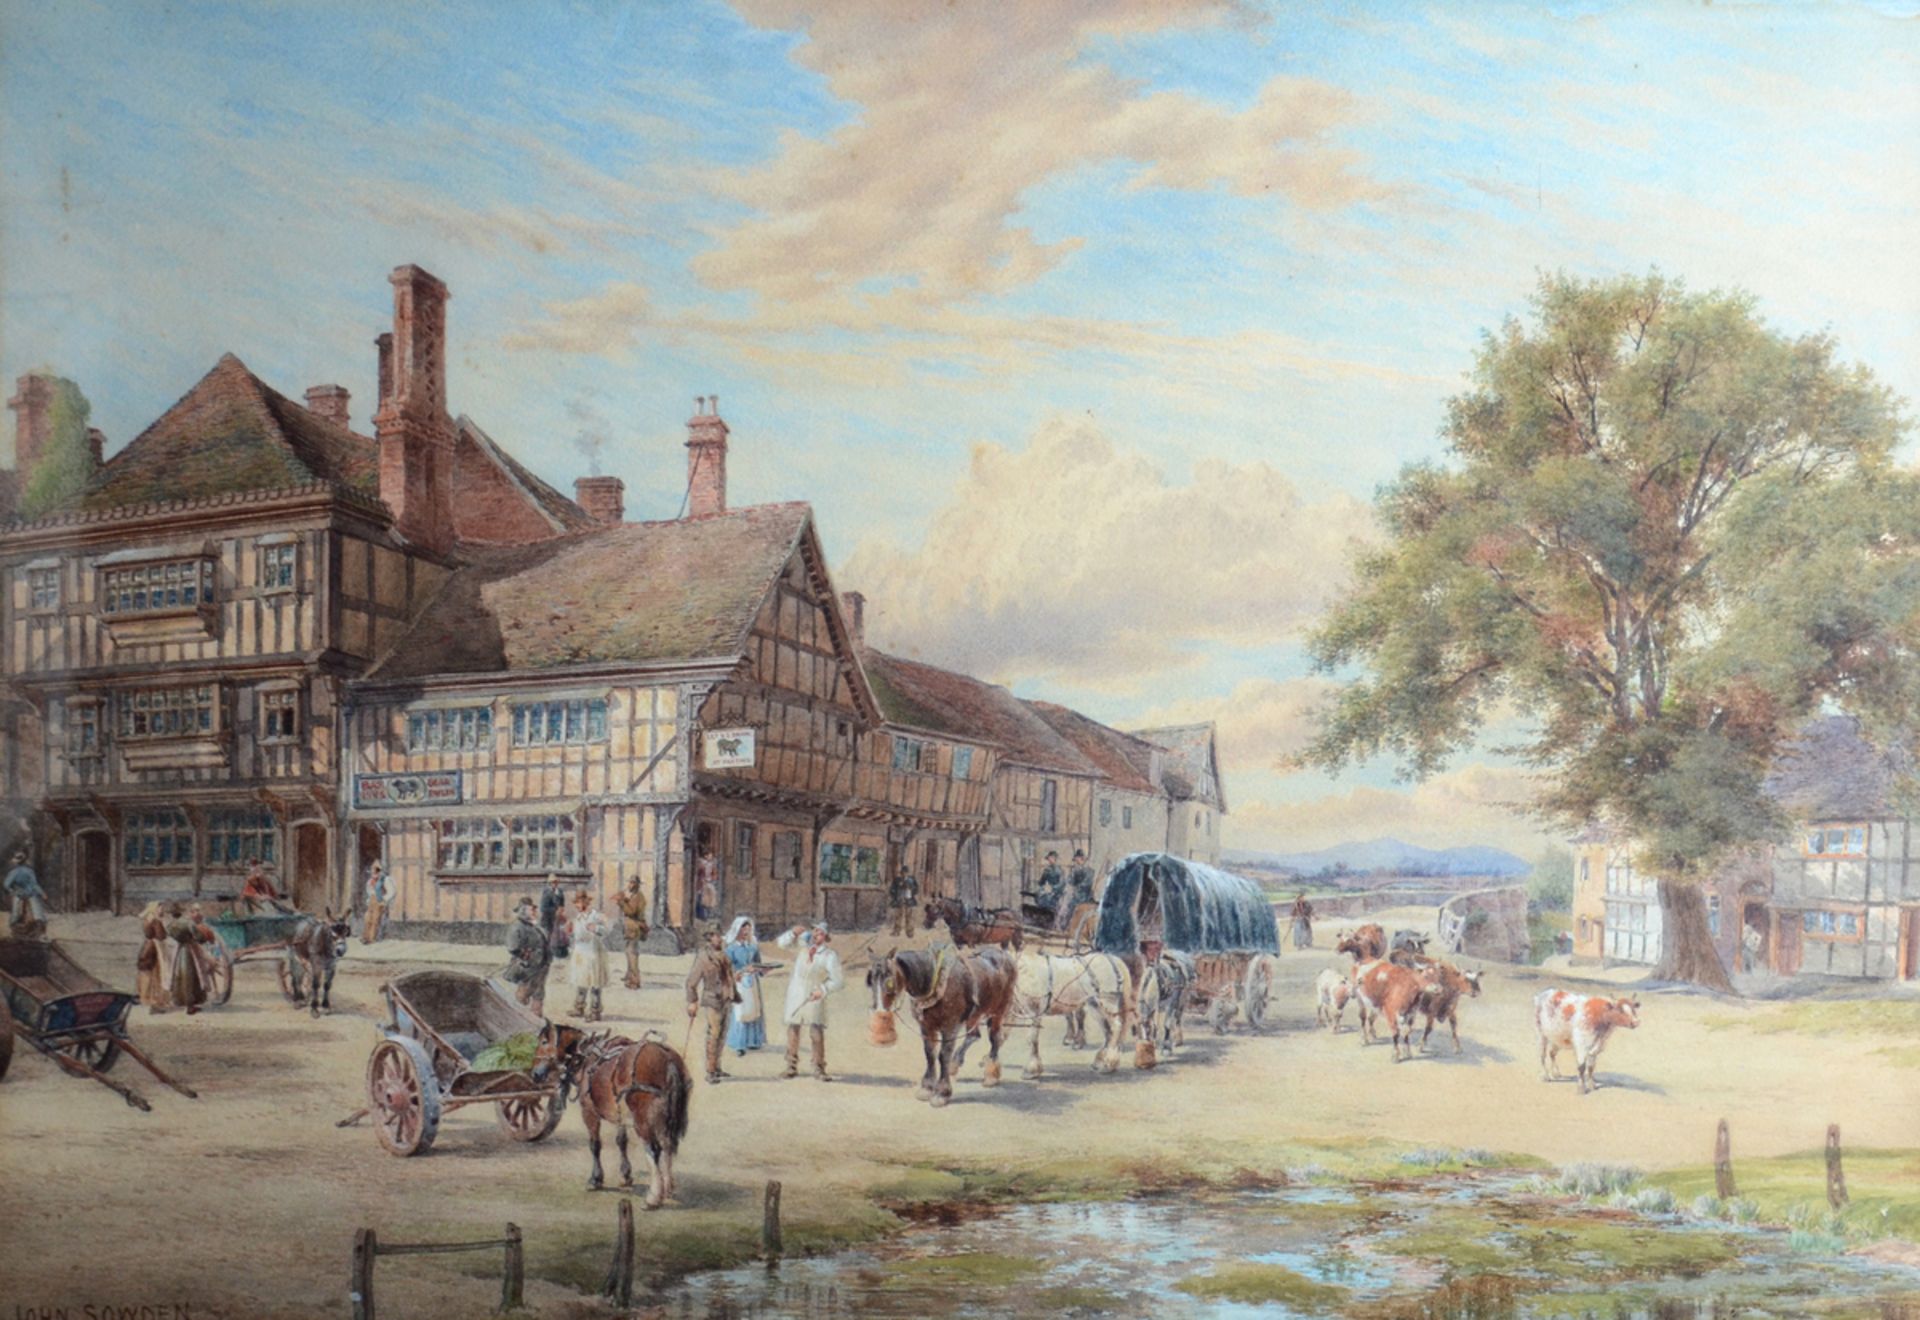 John Sowden: gouache 'Tewkesbury Old Inn' (76x54cm)